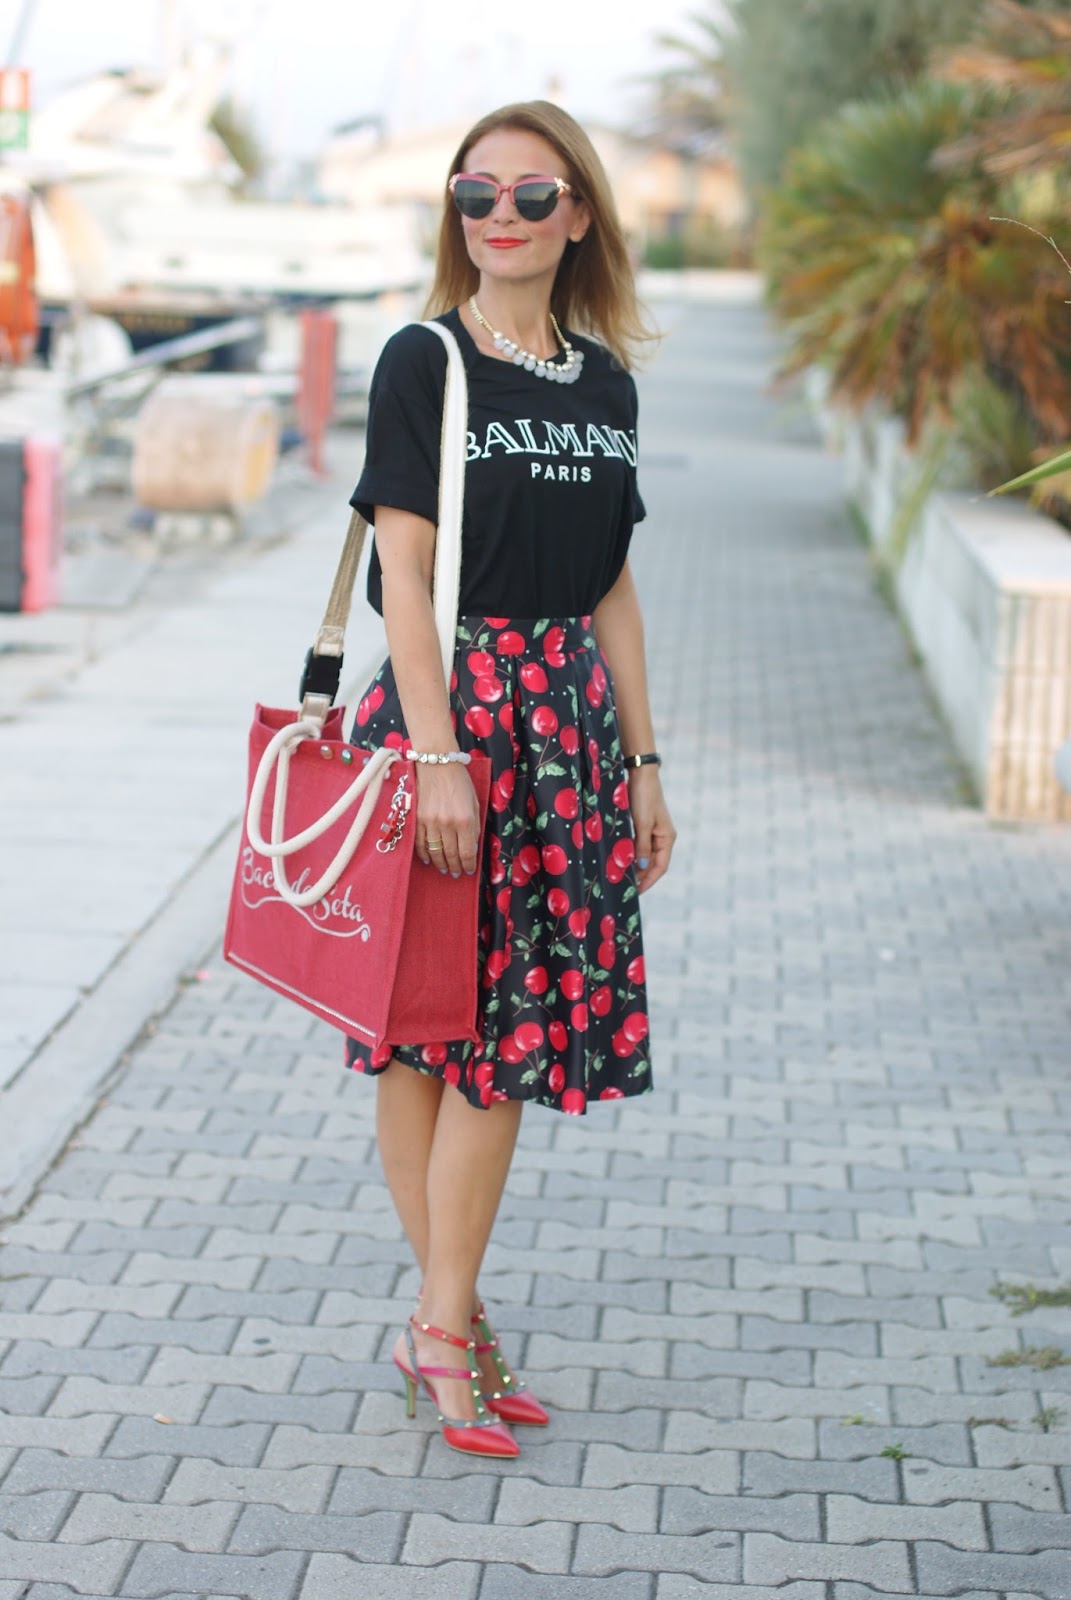 BACO DA SETA anti-theft bag | Fashion and Cookies - fashion and beauty blog